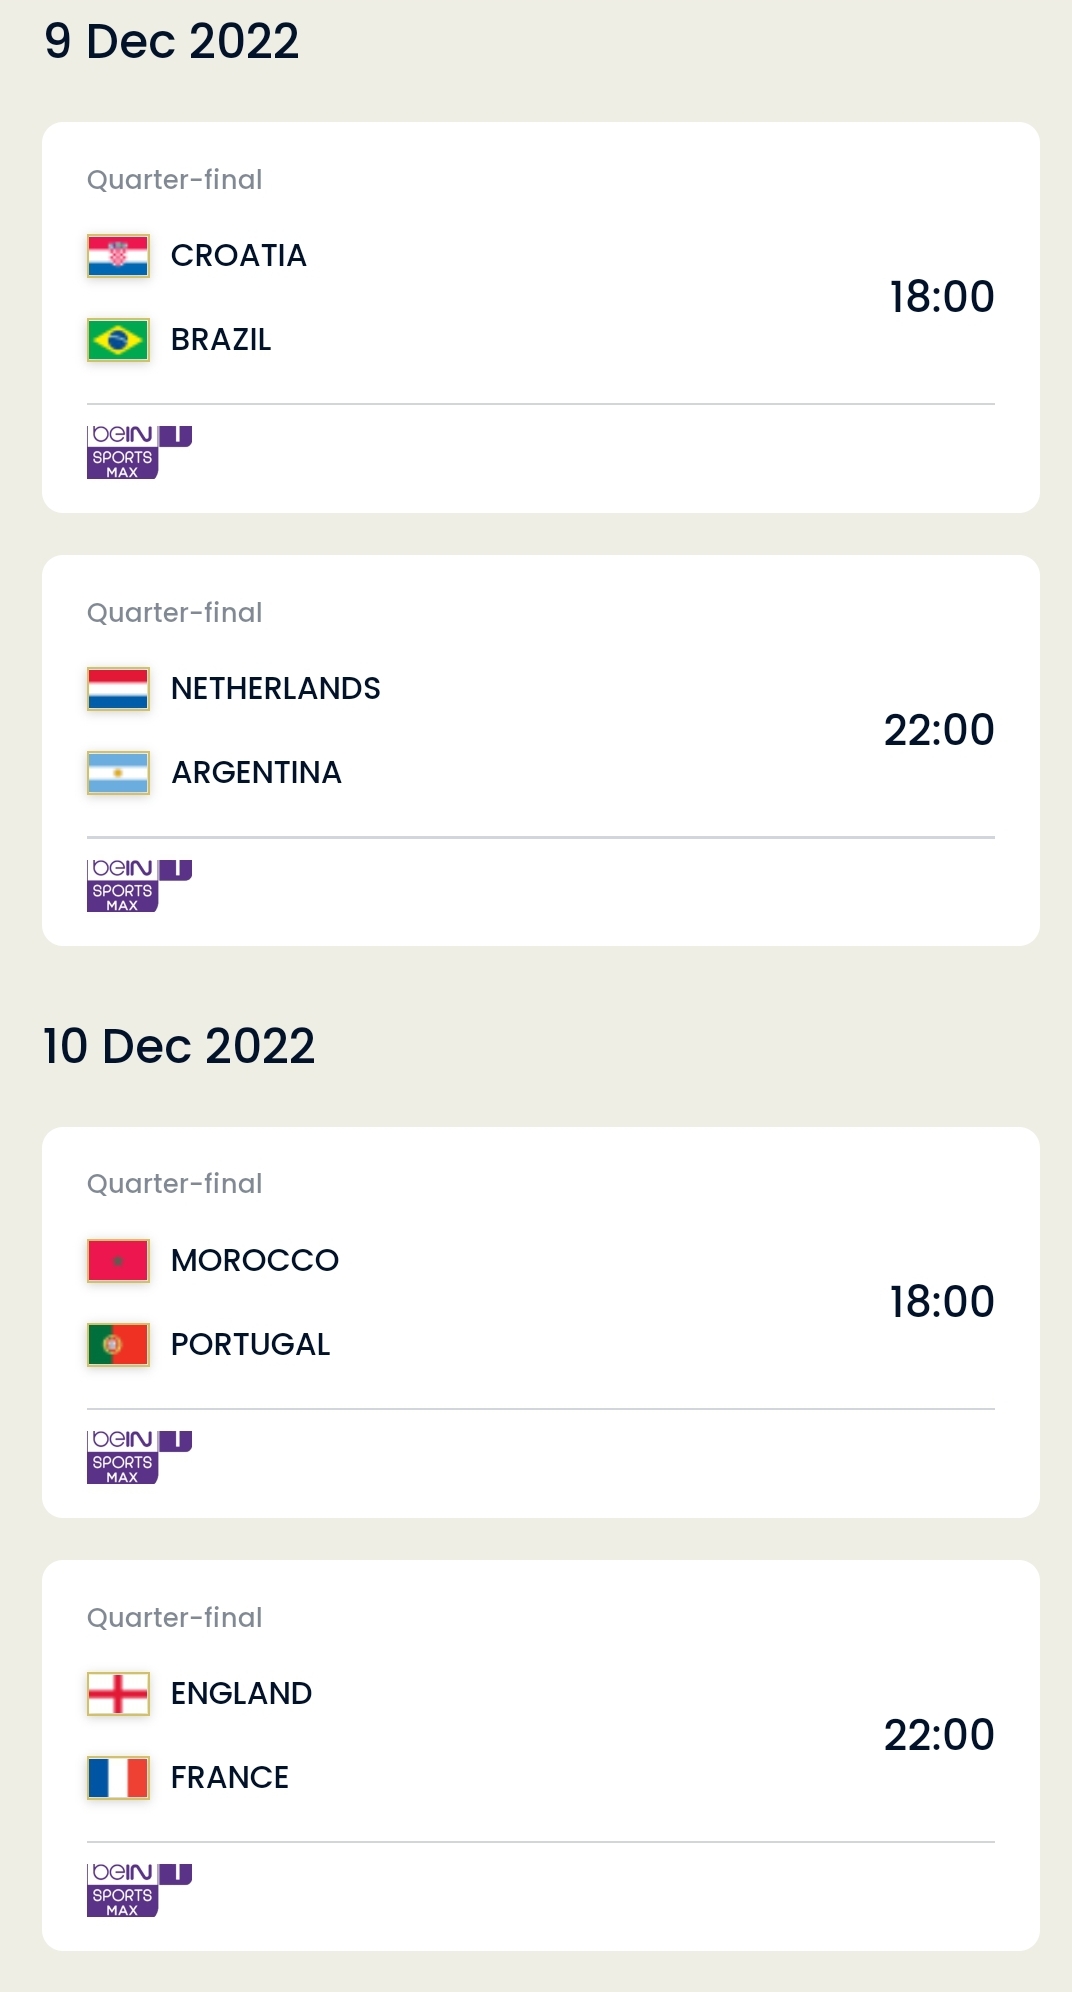 FIFA World Cup Quarter Finals schedule announced